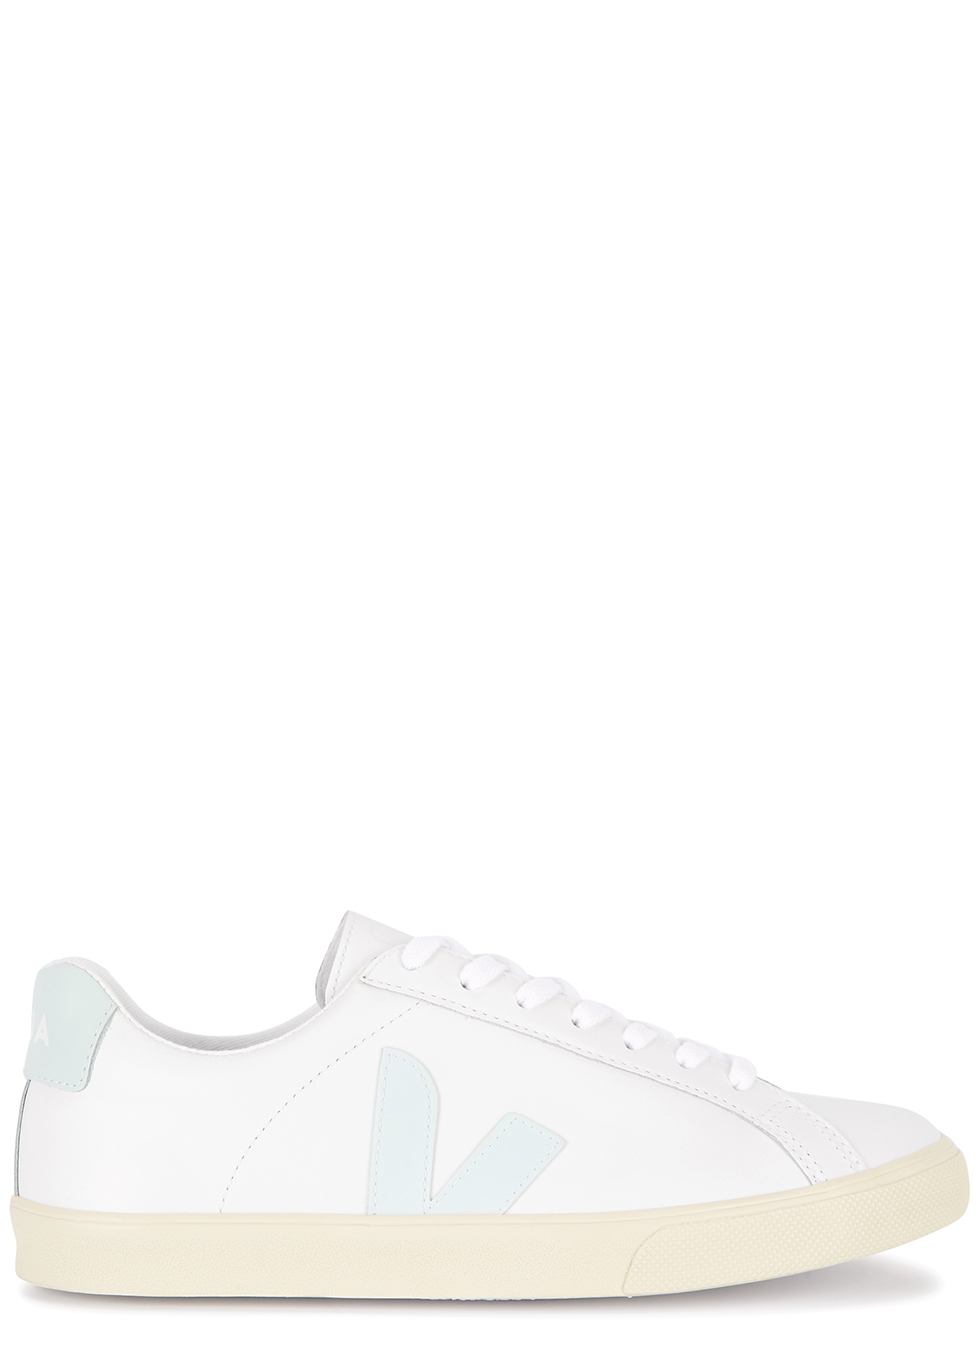 Veja Esplar white leather sneakers - Harvey Nichols